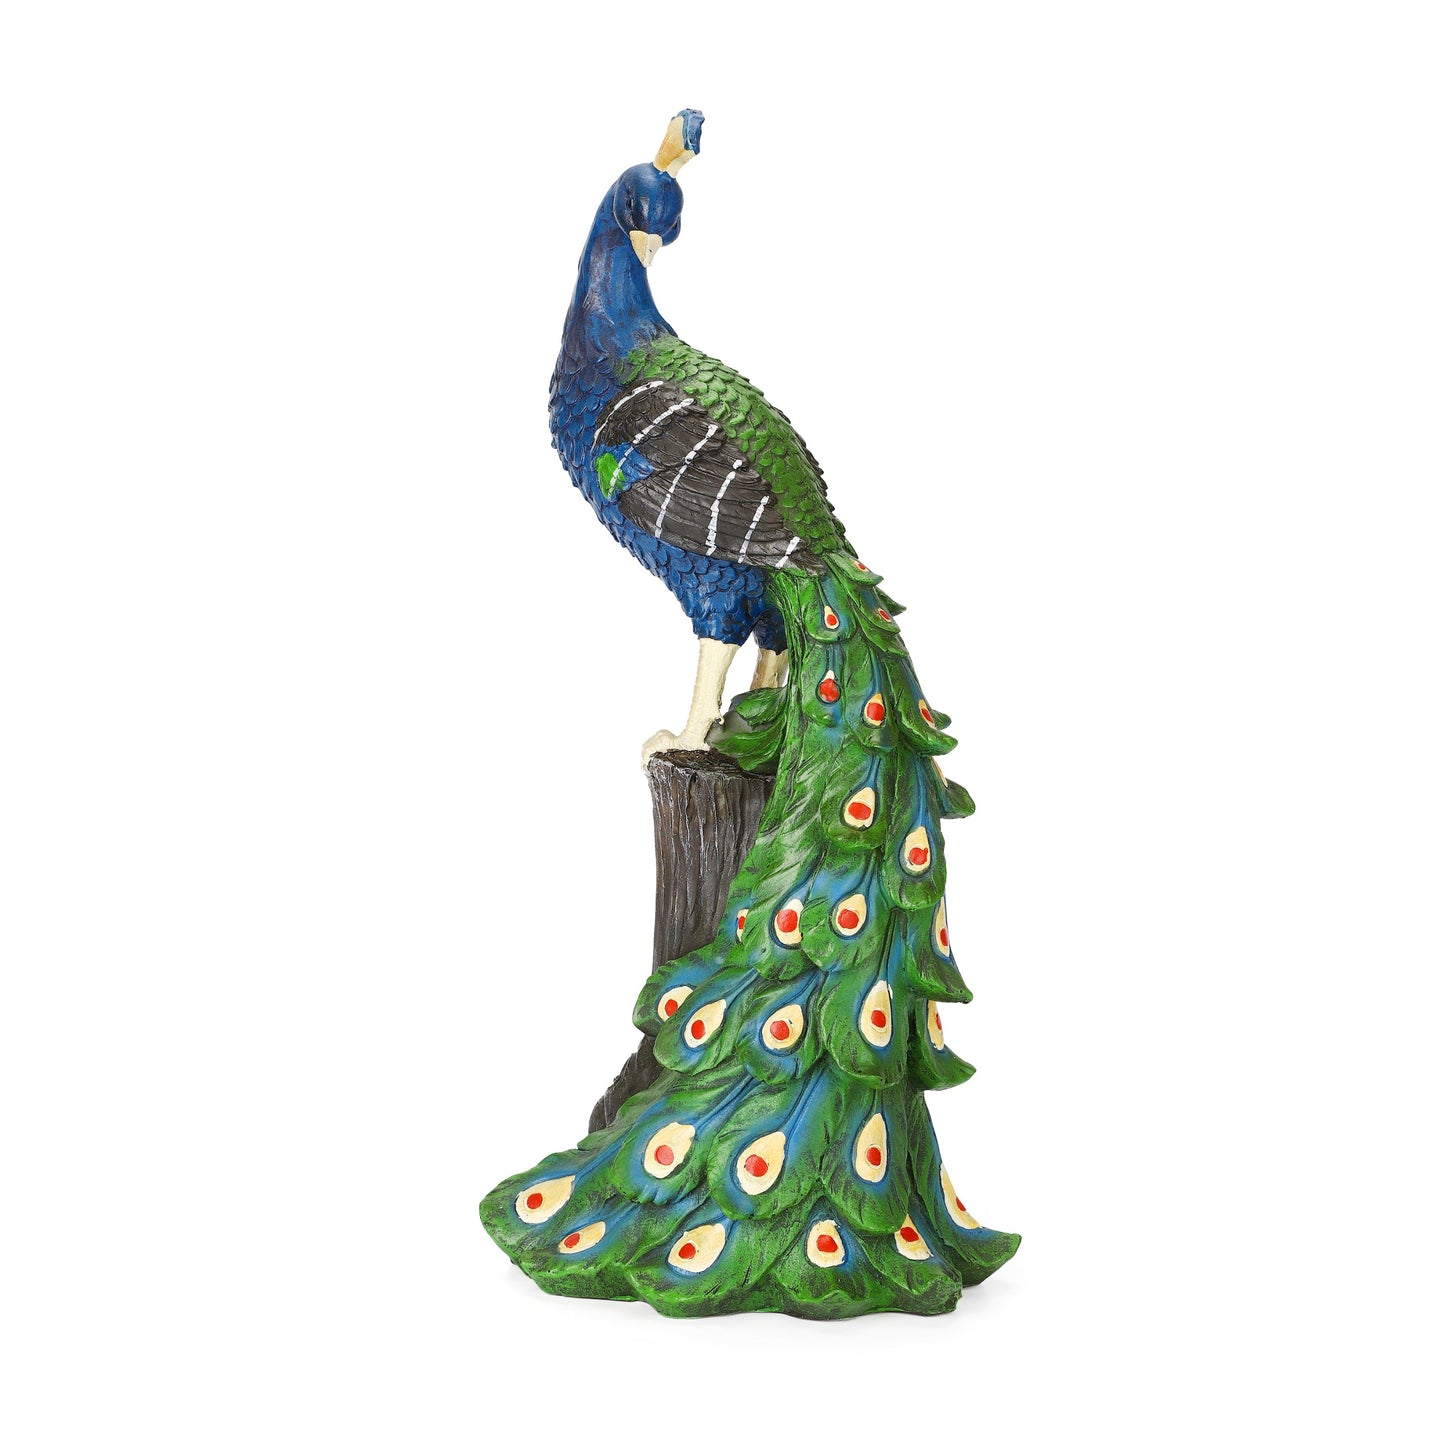 Peaceful Peacock Statue with High-Power Solar Spotlight